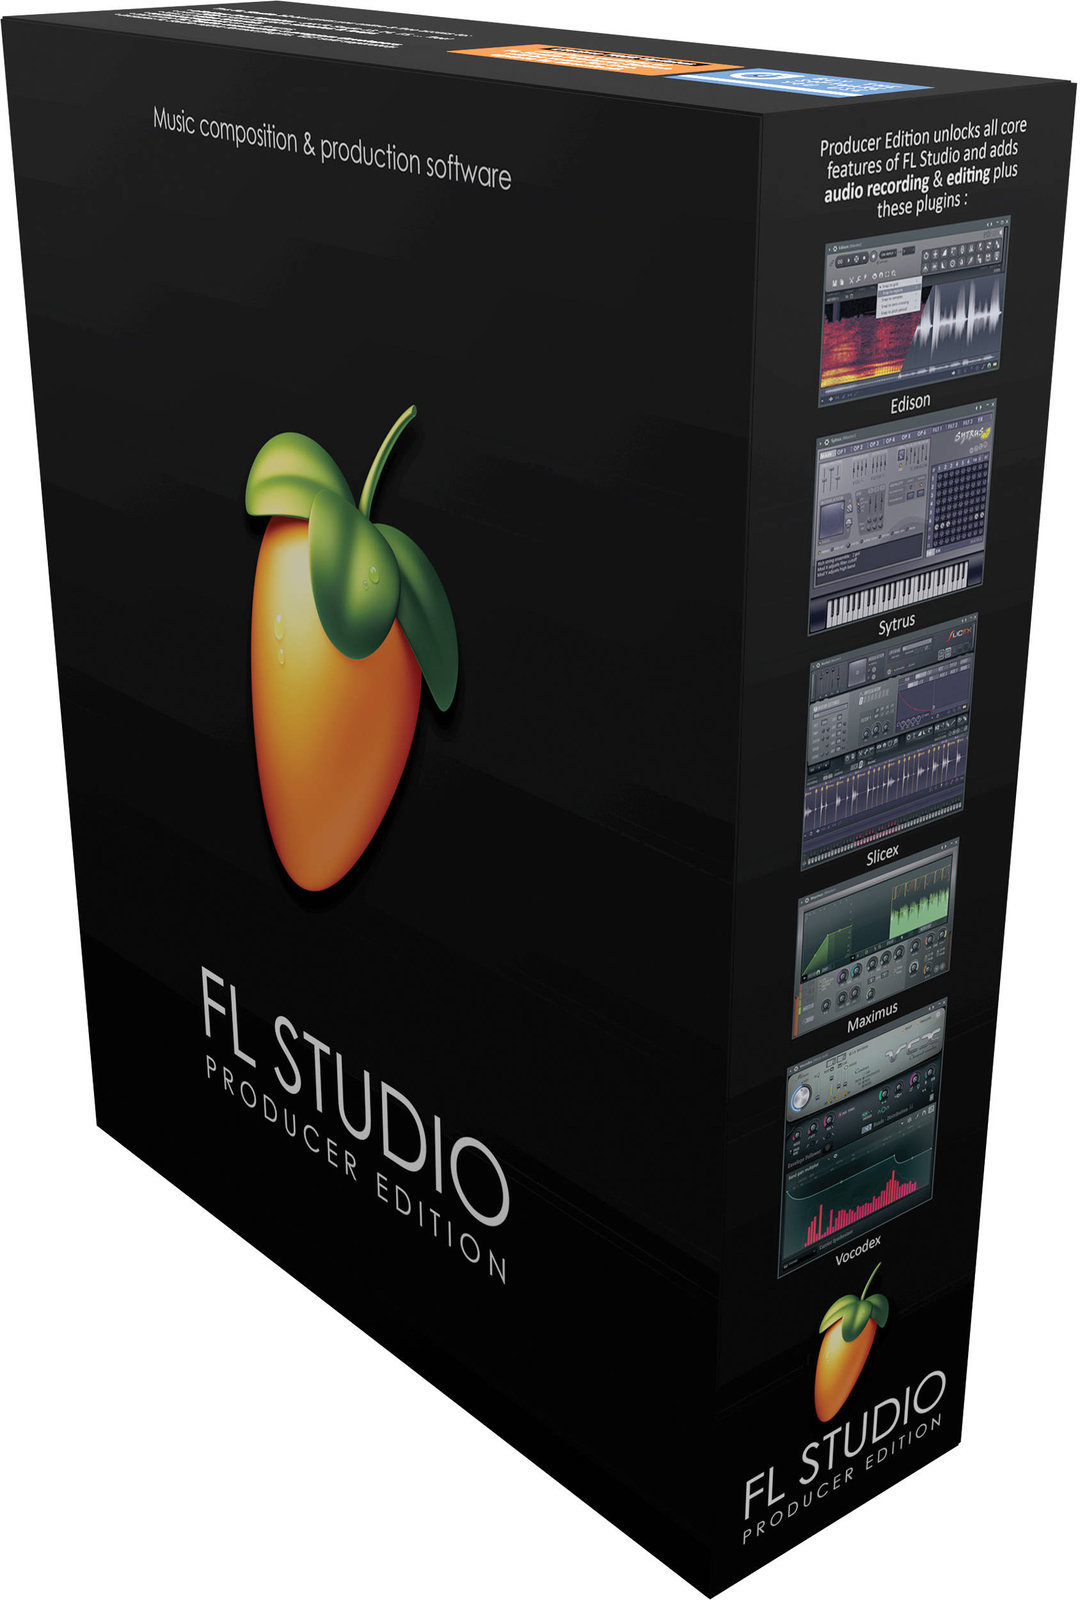 DAW-tallennusohjelmisto Image Line FL Studio 12 Producer Edition